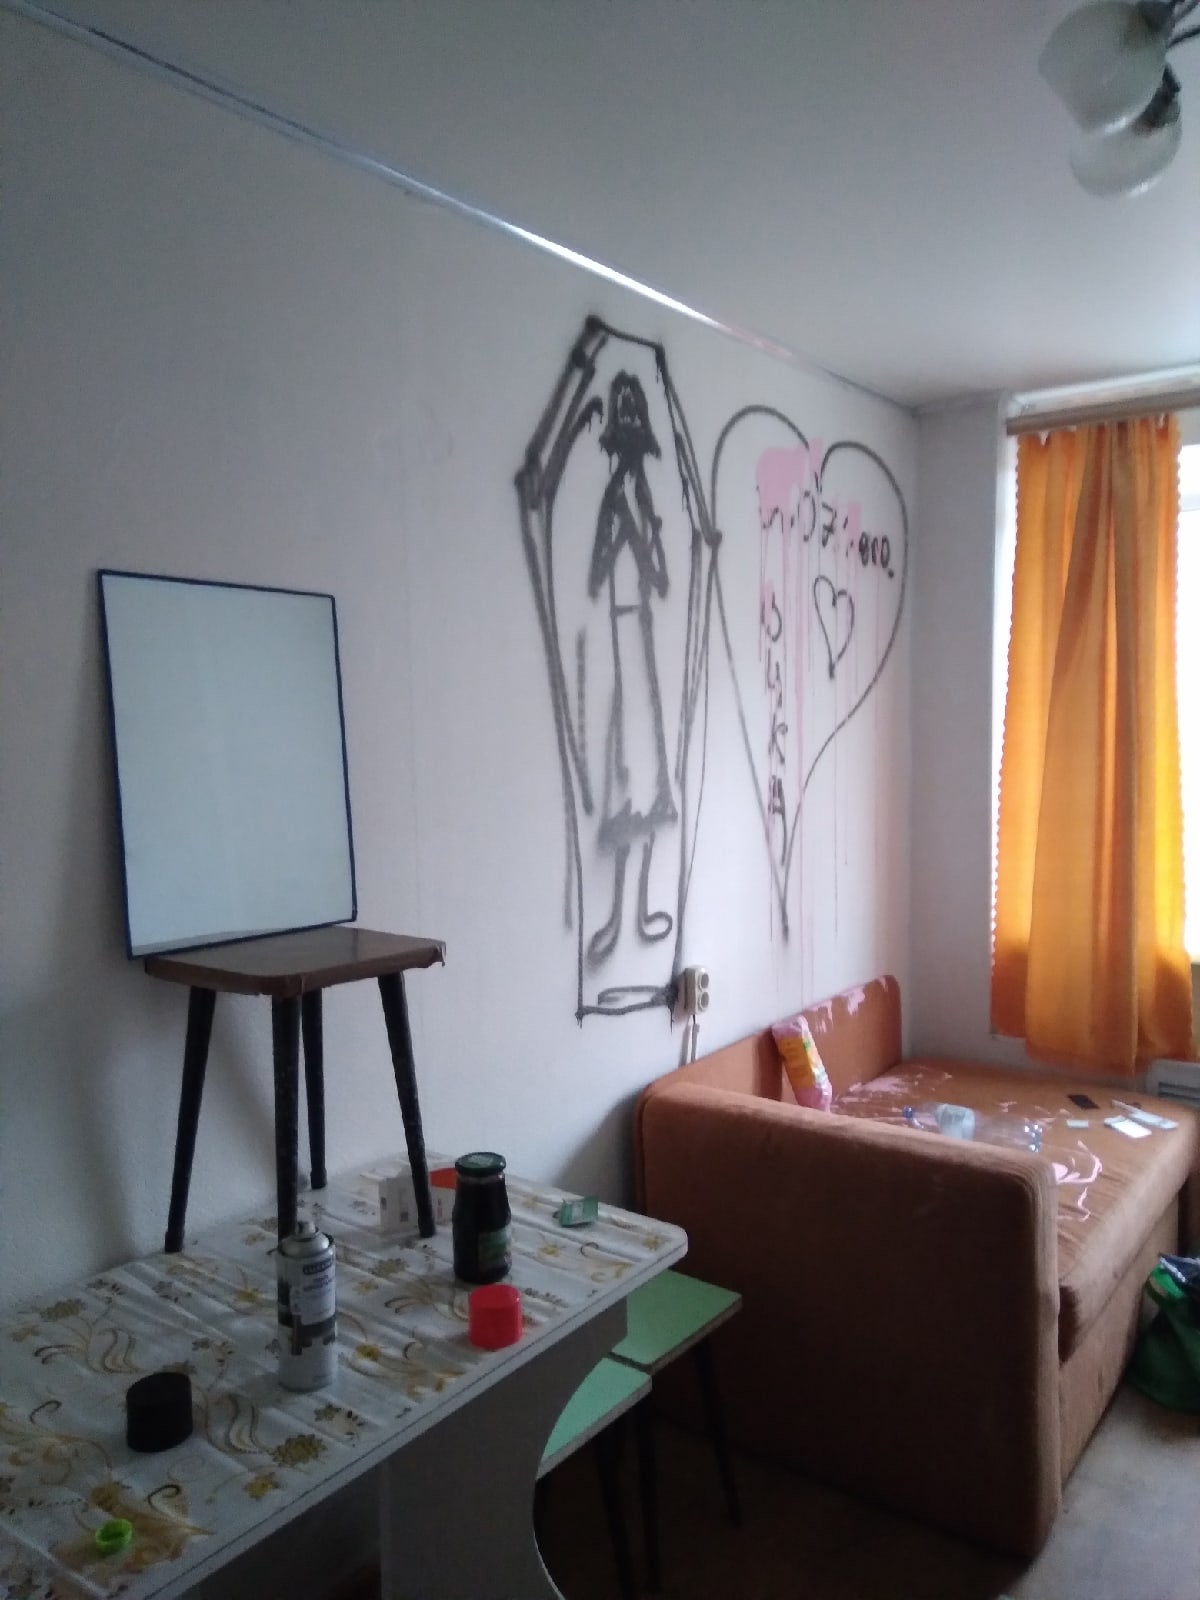 Вандал испортил съемную квартиру пожеланиями смерти ярославцам